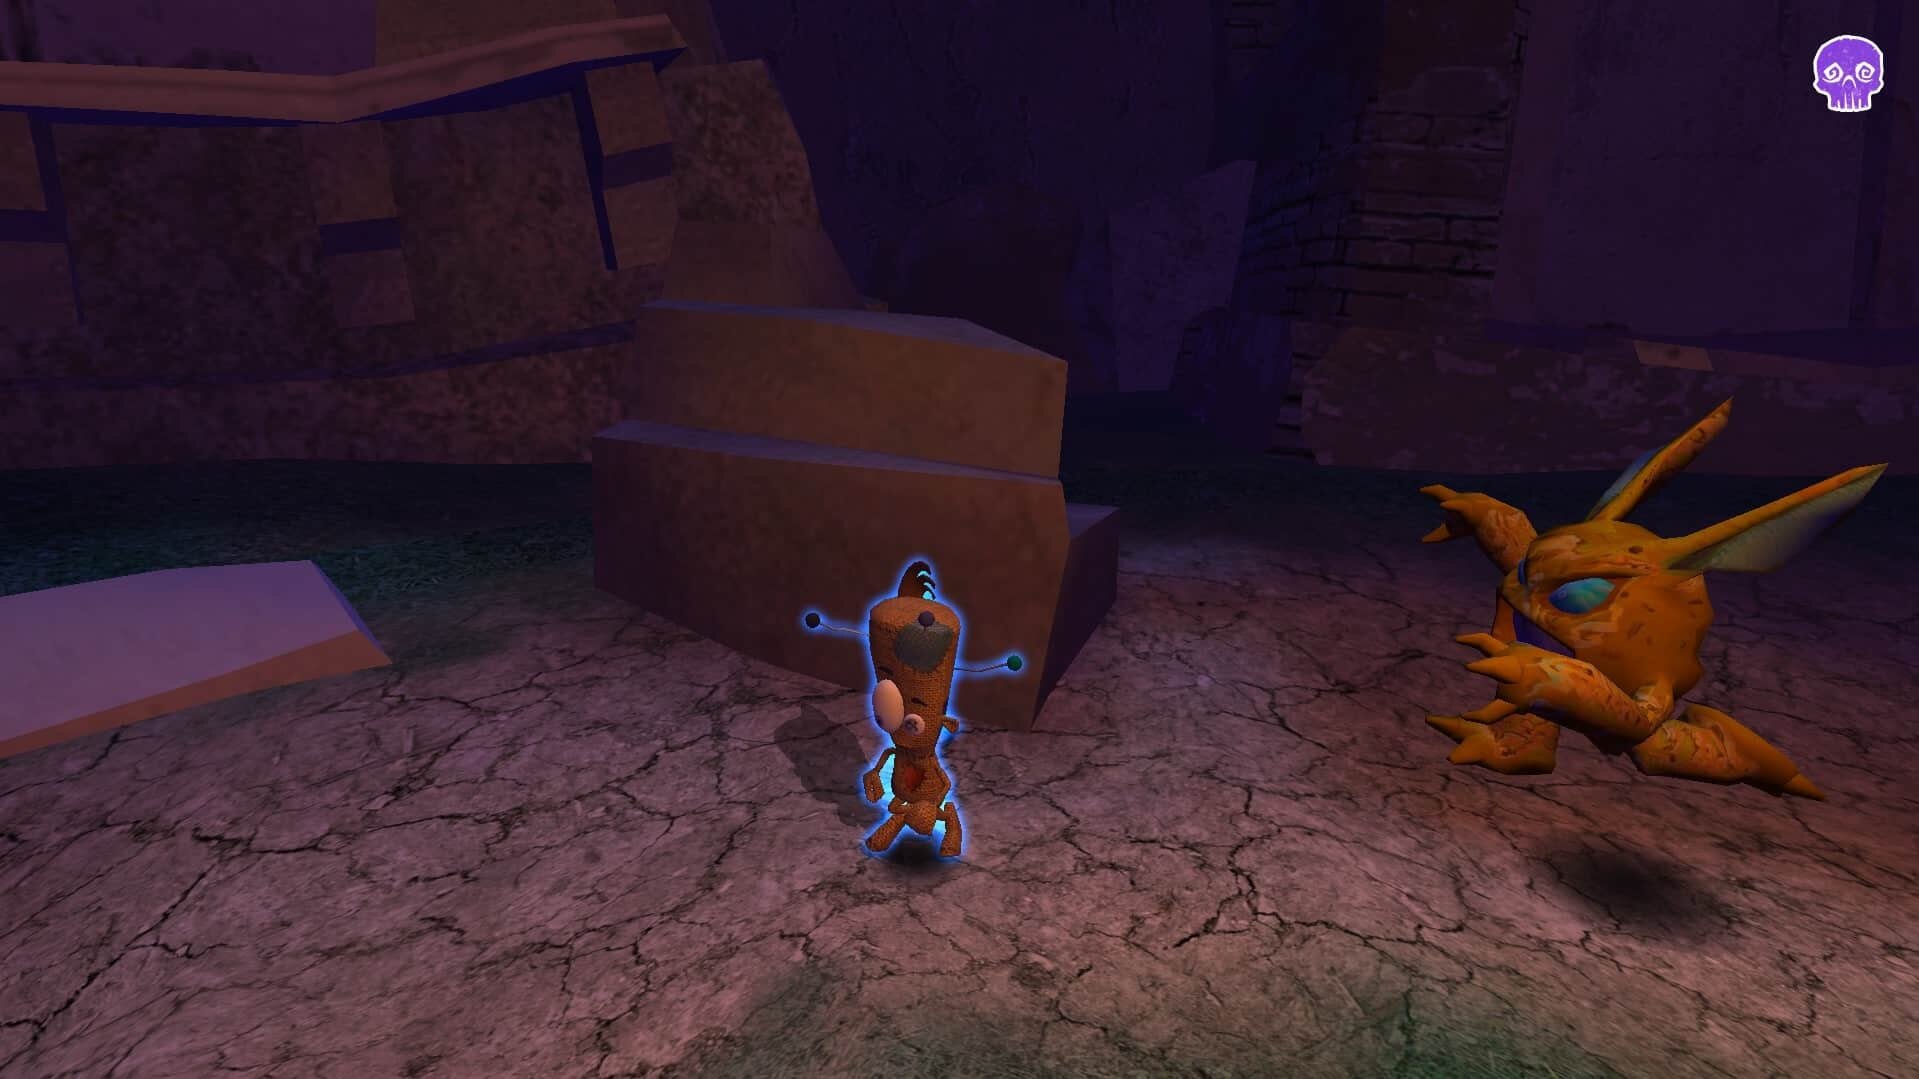 Voodoo Vince game screenshot, monster chase